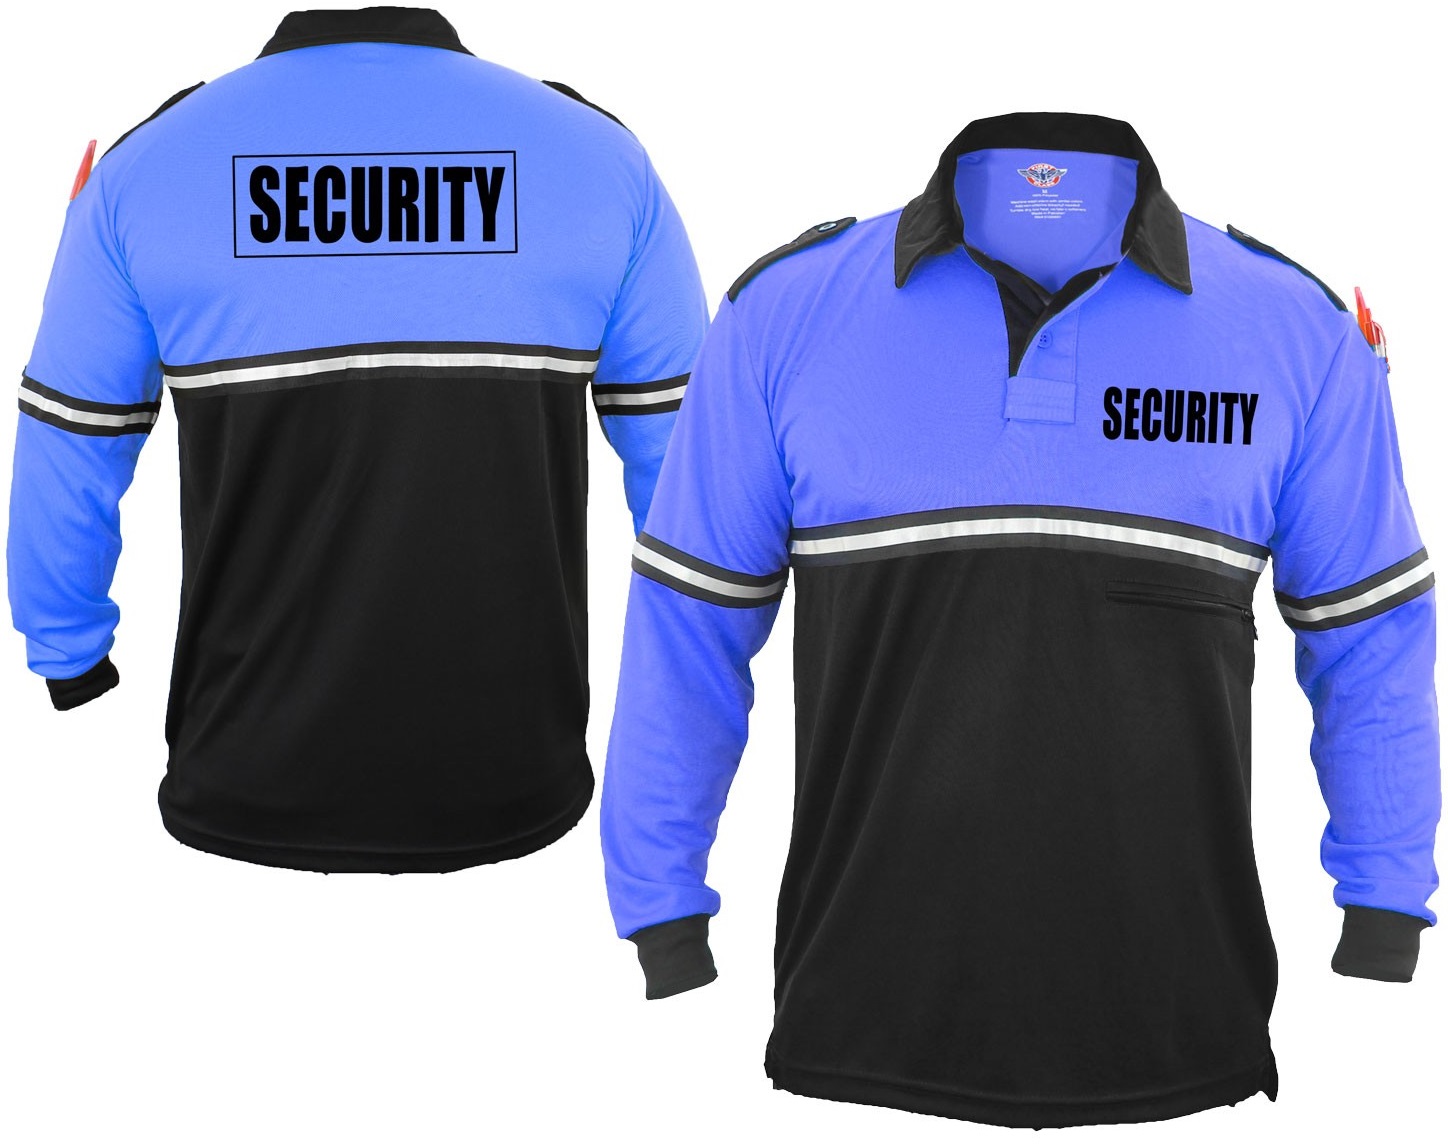 Genuine Ex Police Microfleece Keela Blue Uniform Security Patrol Cycling Grade 1 